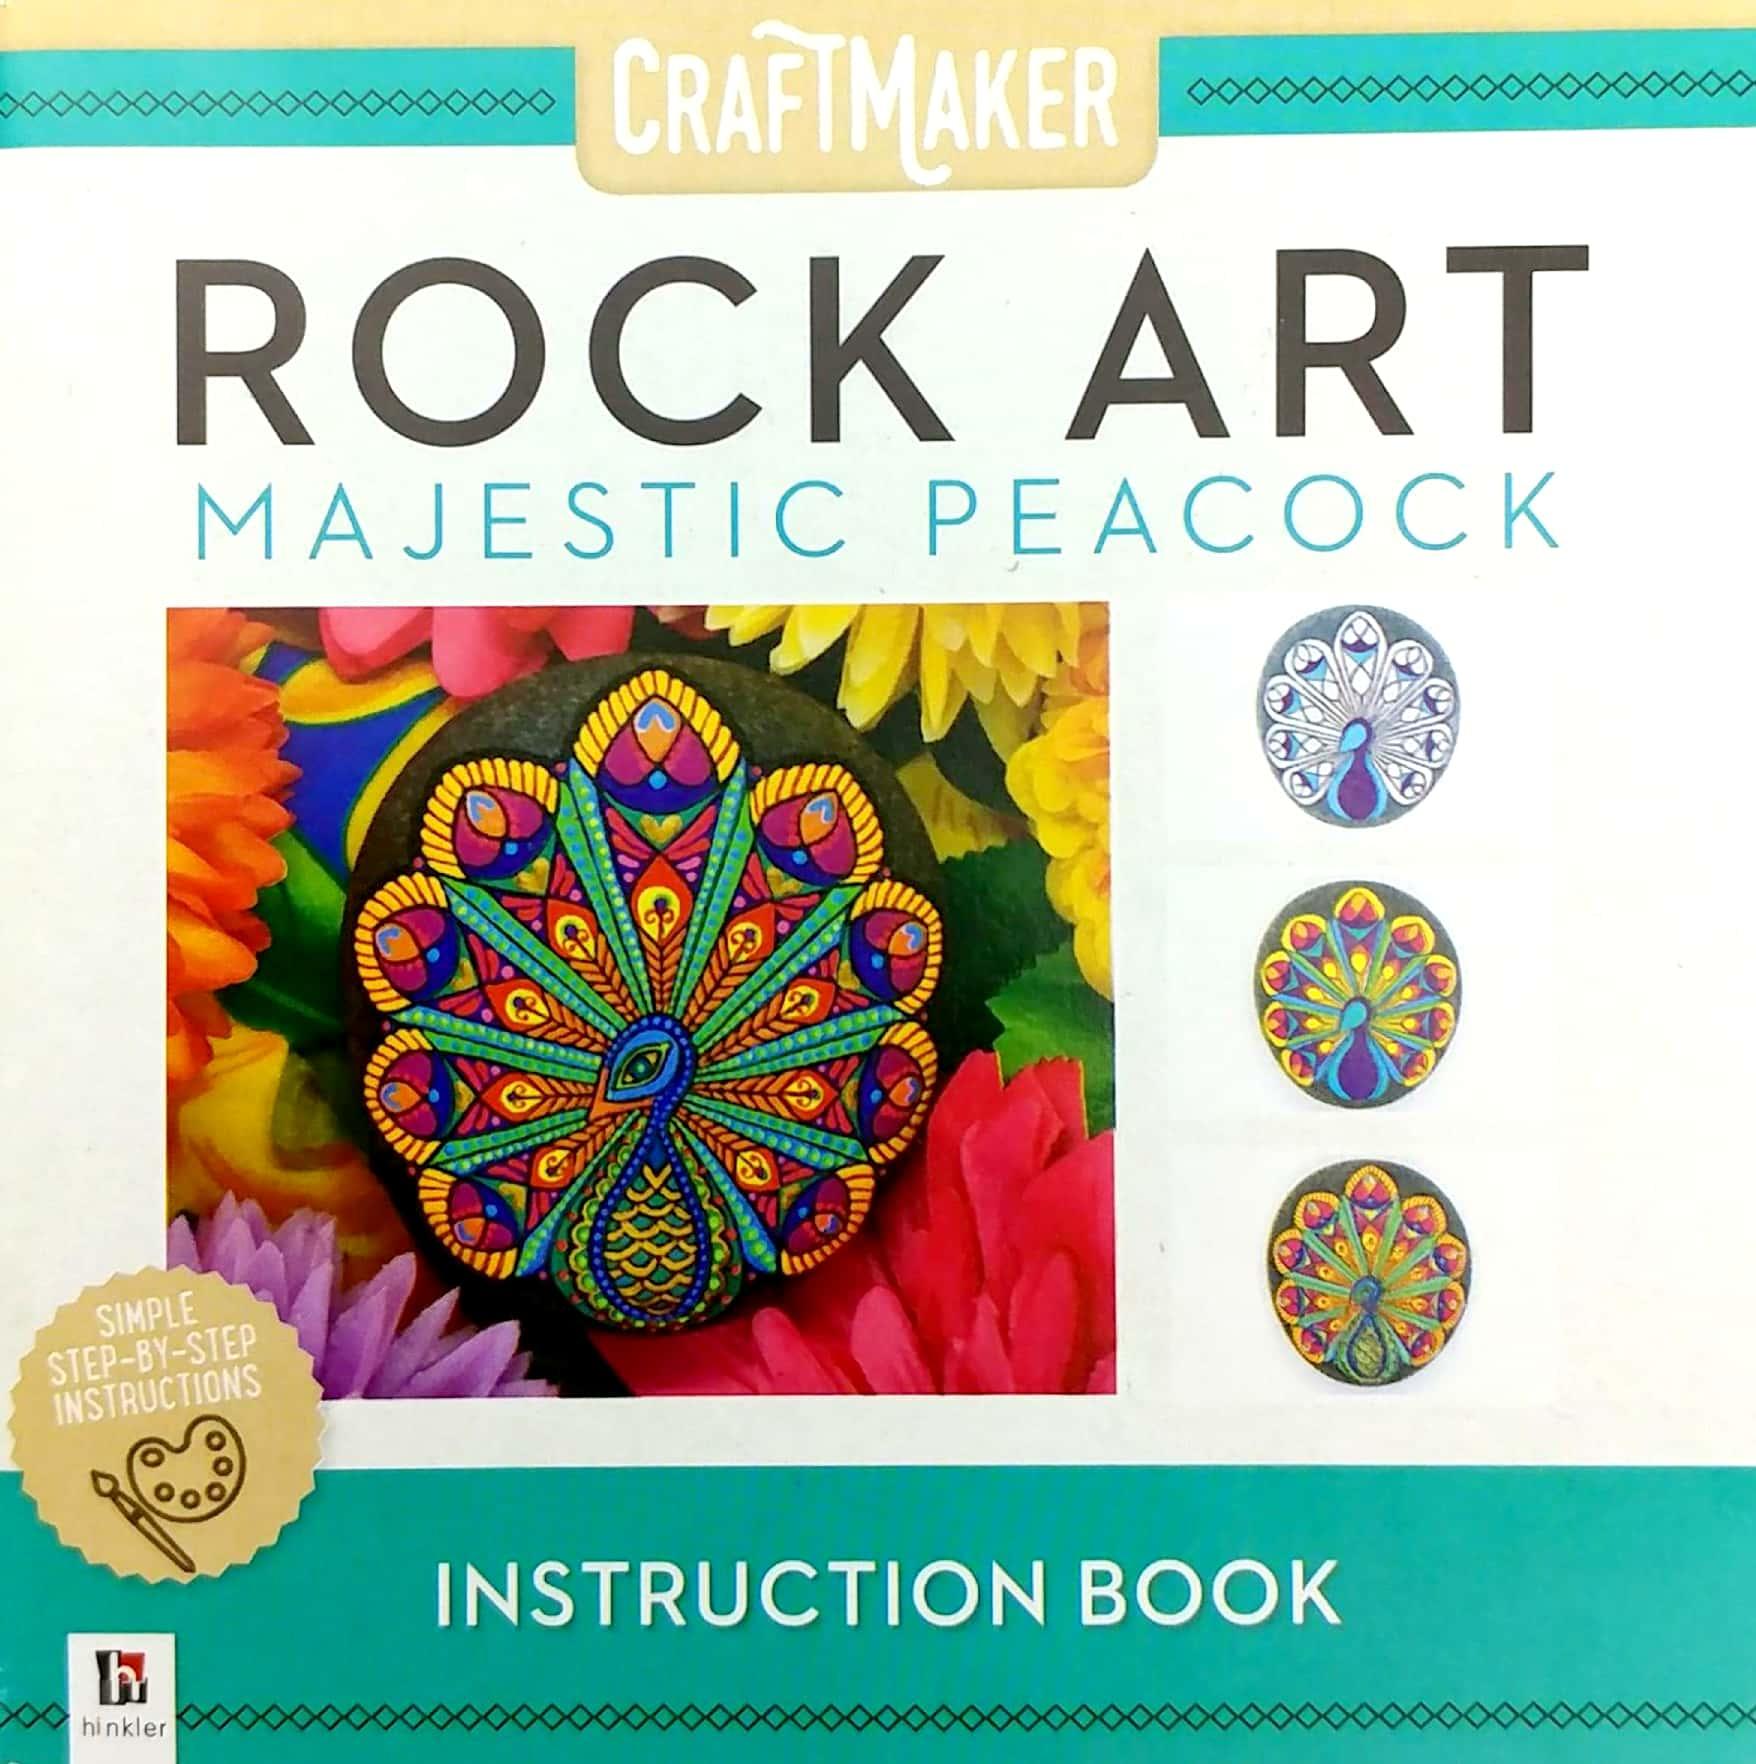 Craftmaker Rock Art Mini Kit: Majestic Peacock